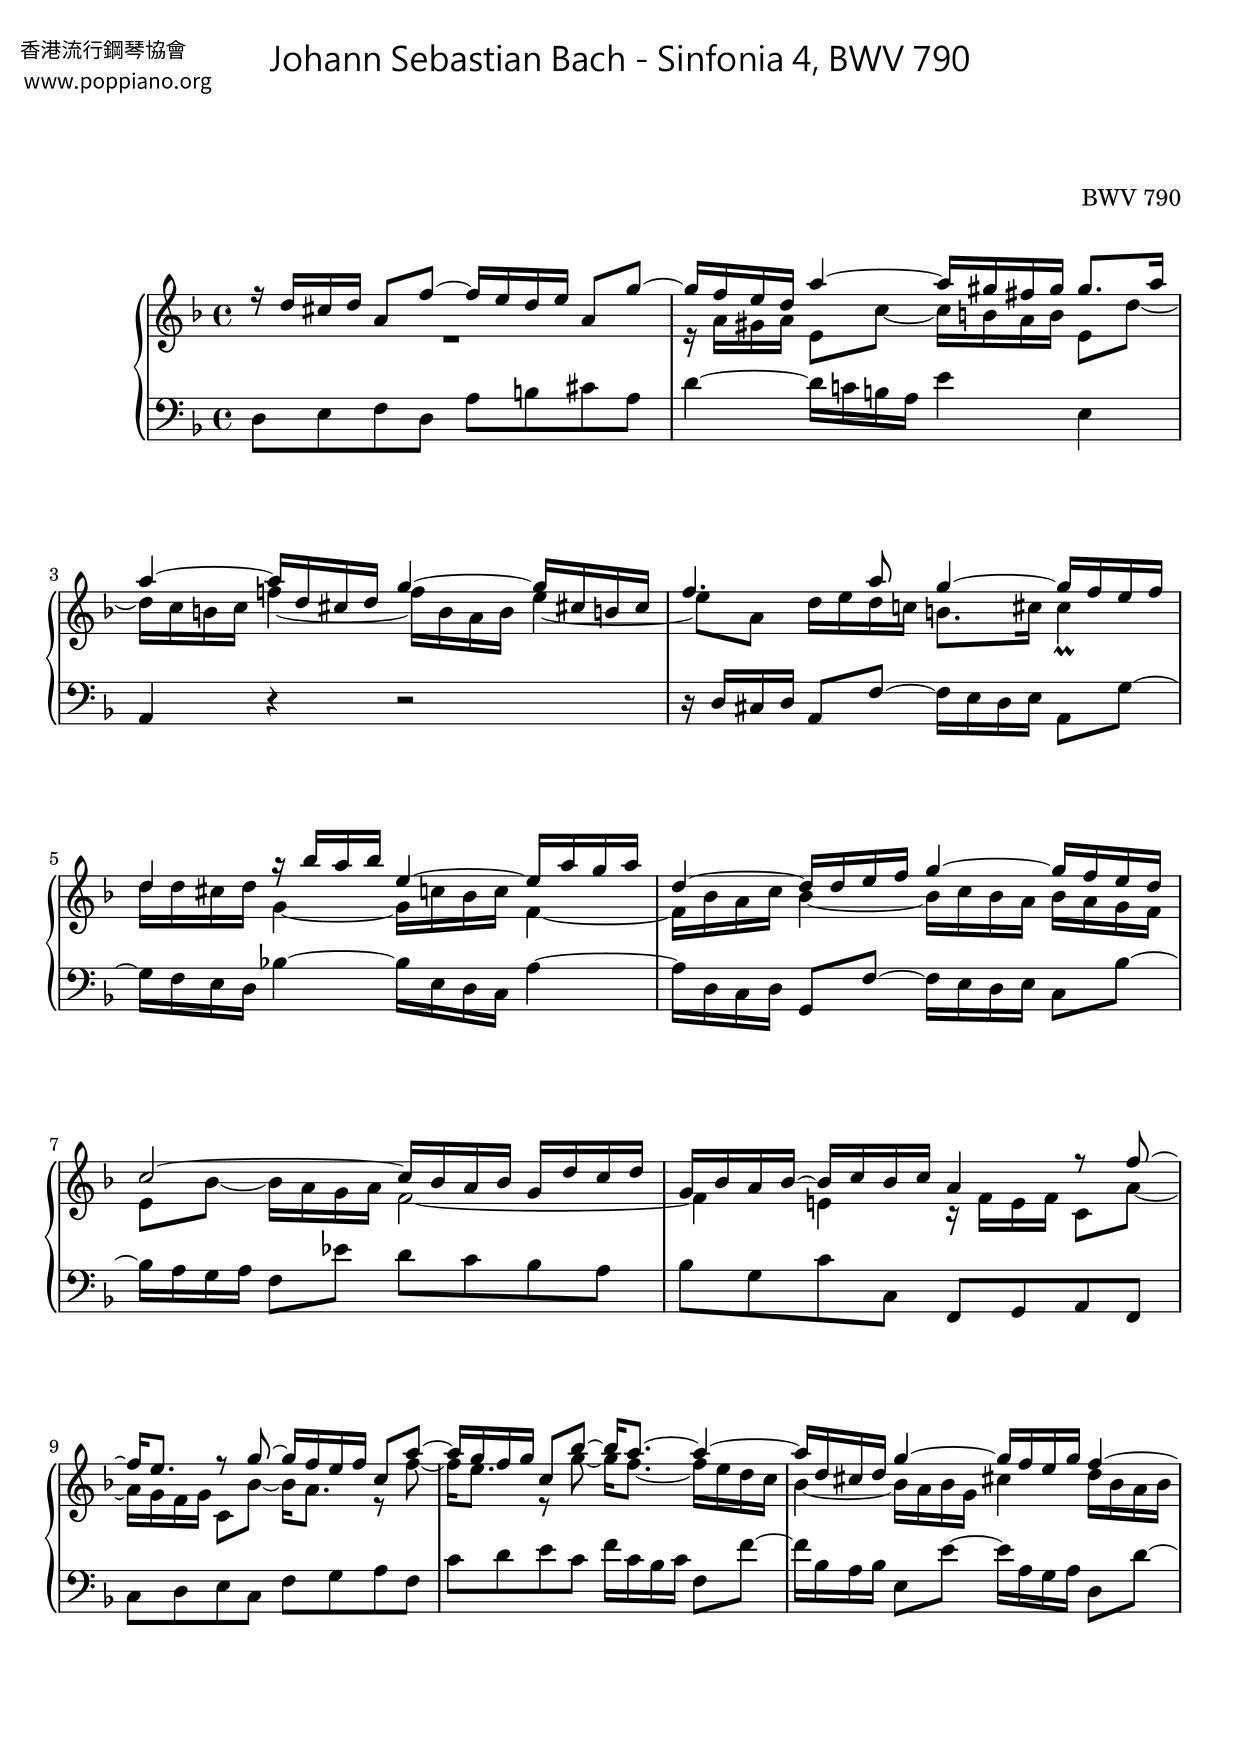 Sinfonia 4, BWV 790 Score